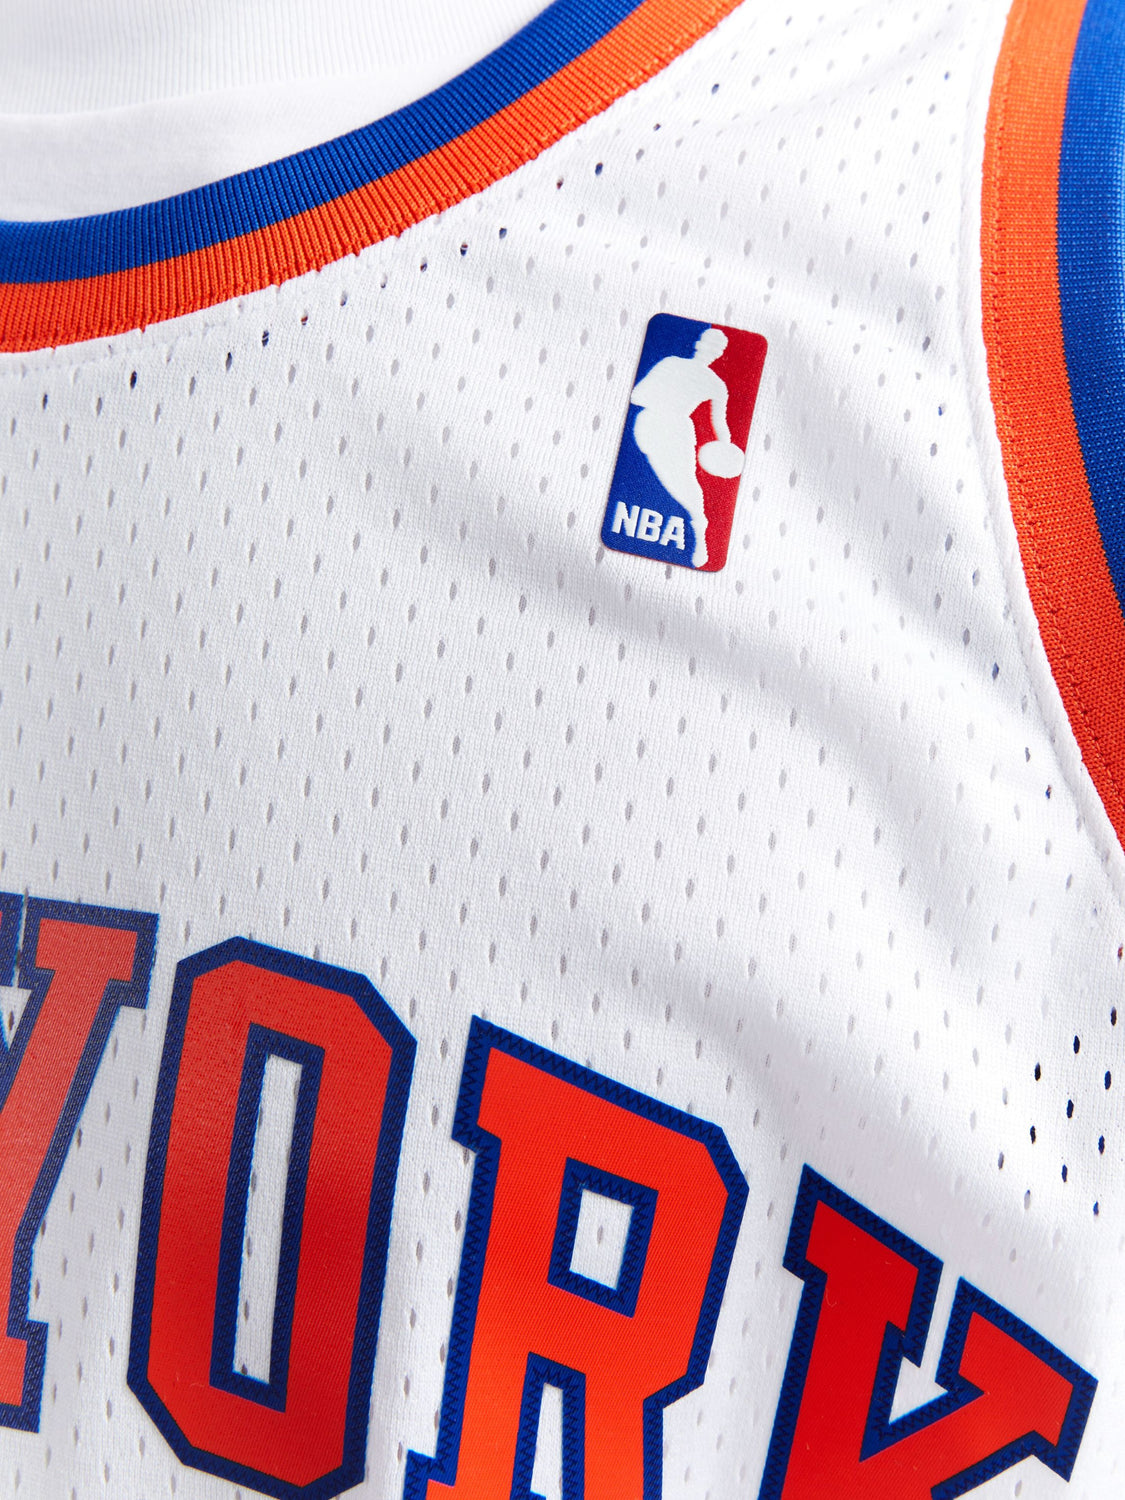 Nate Robinson Signed New York Knicks Mitchell & Ness Style Jersey